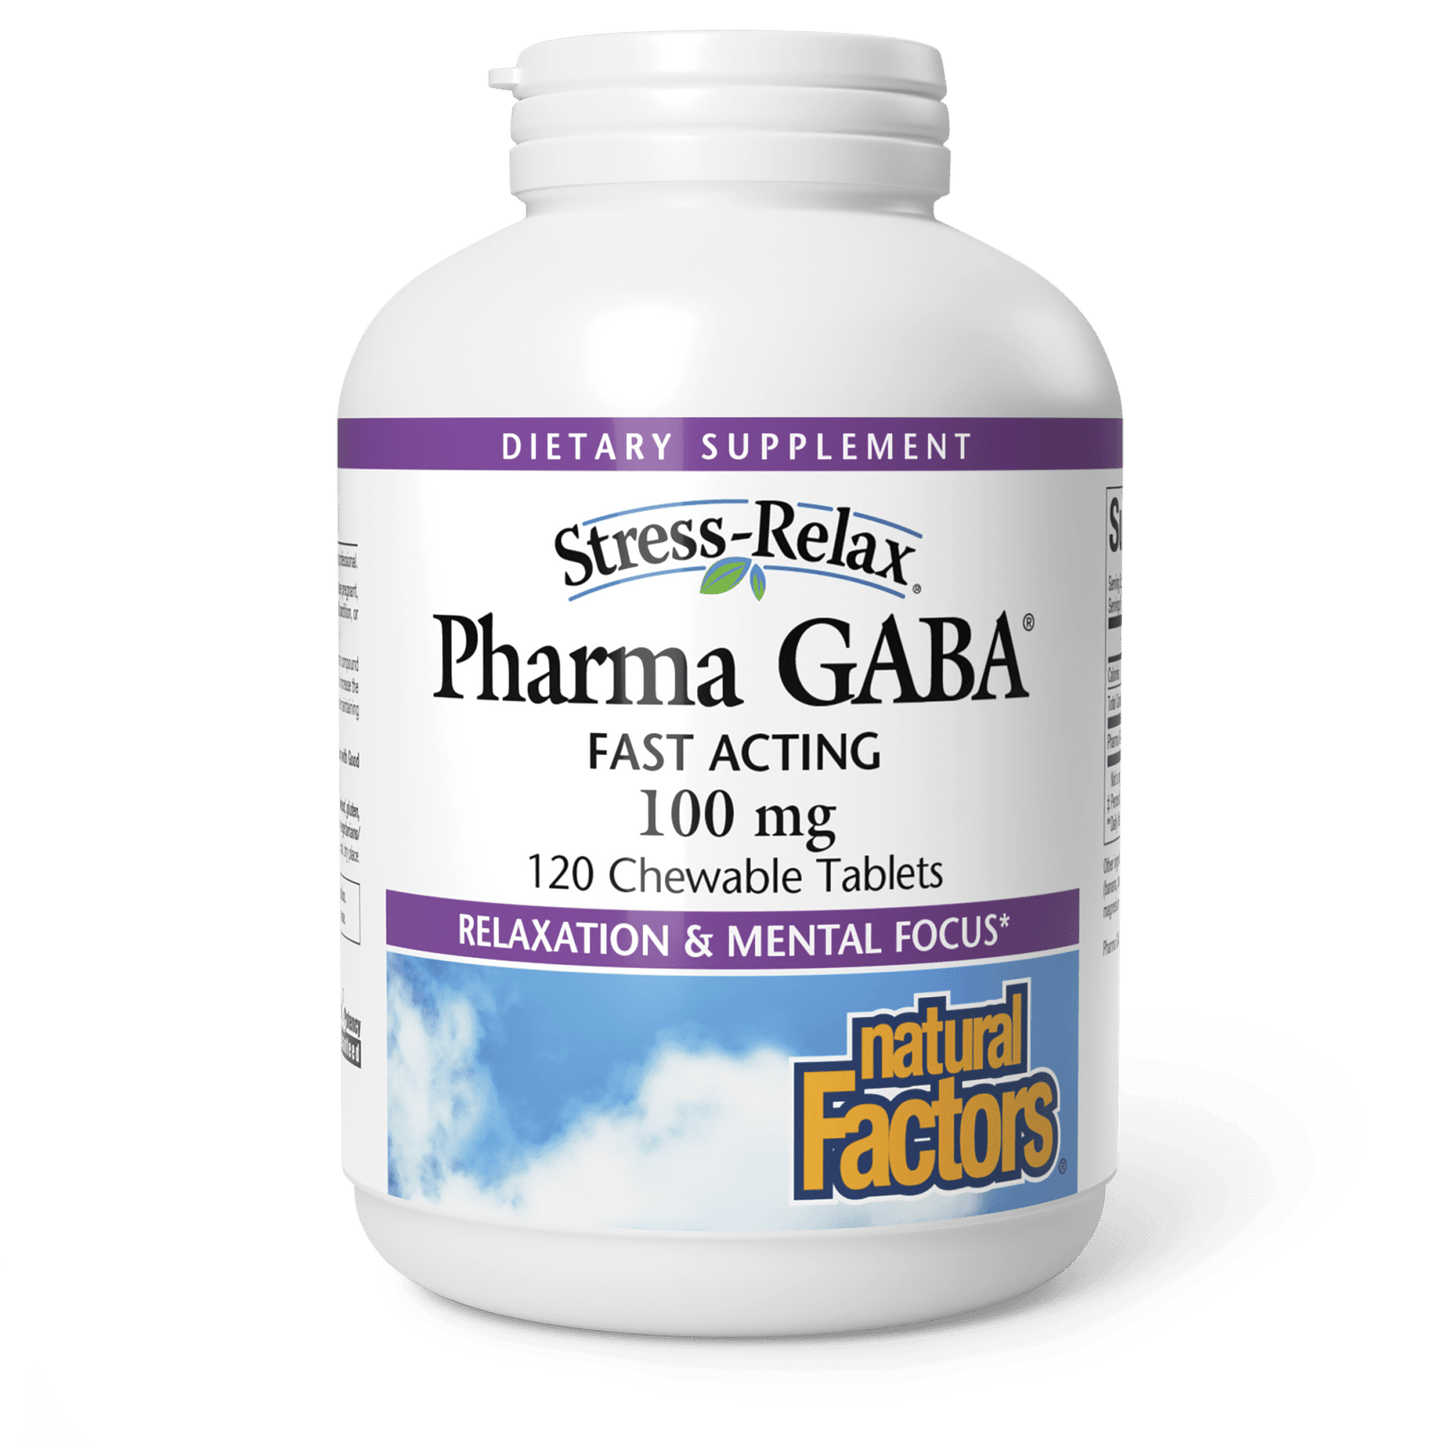 Pharma GABA® for Natural Factors |variant|hi-res|2838U